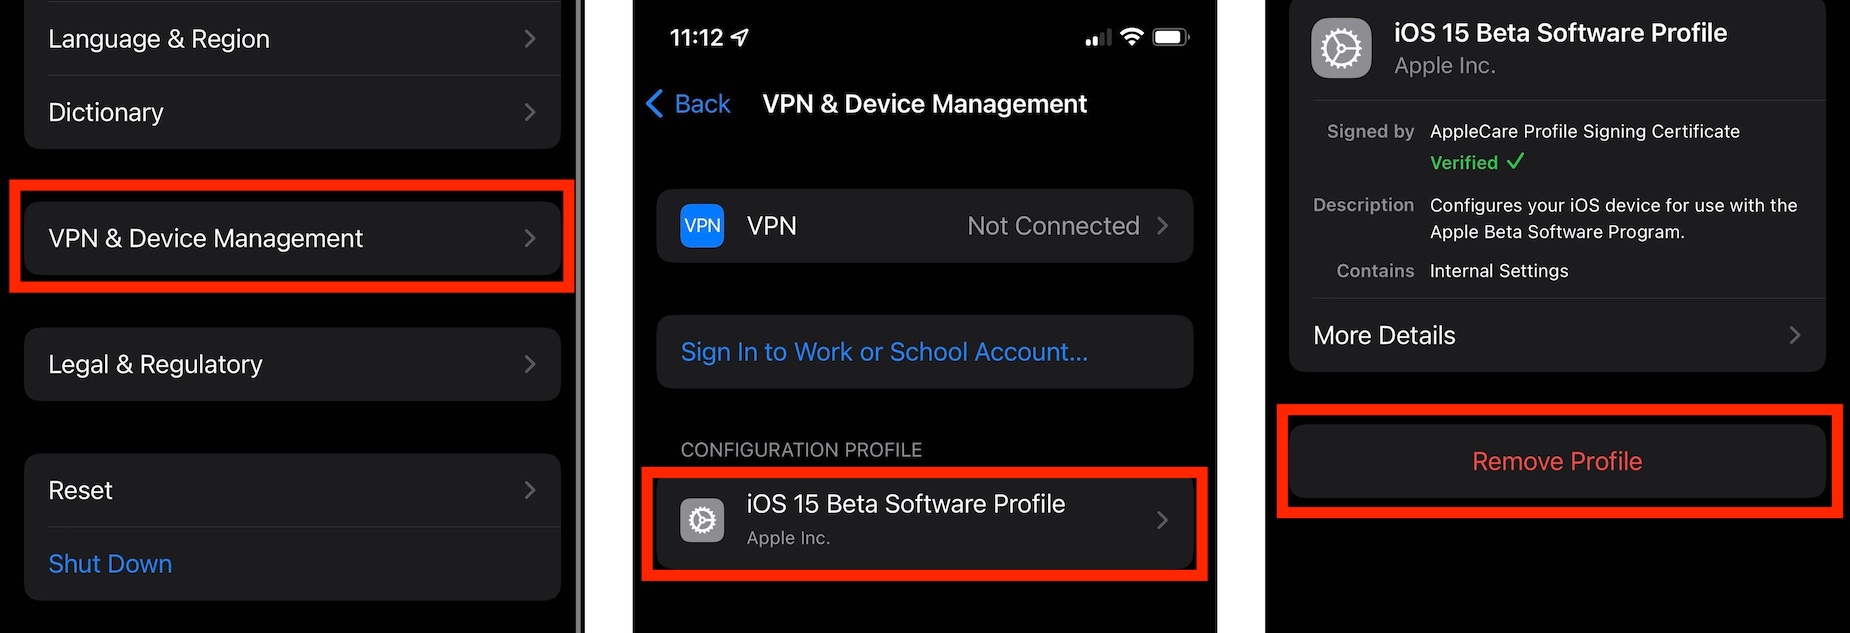 ios 15 beta 4 profile download